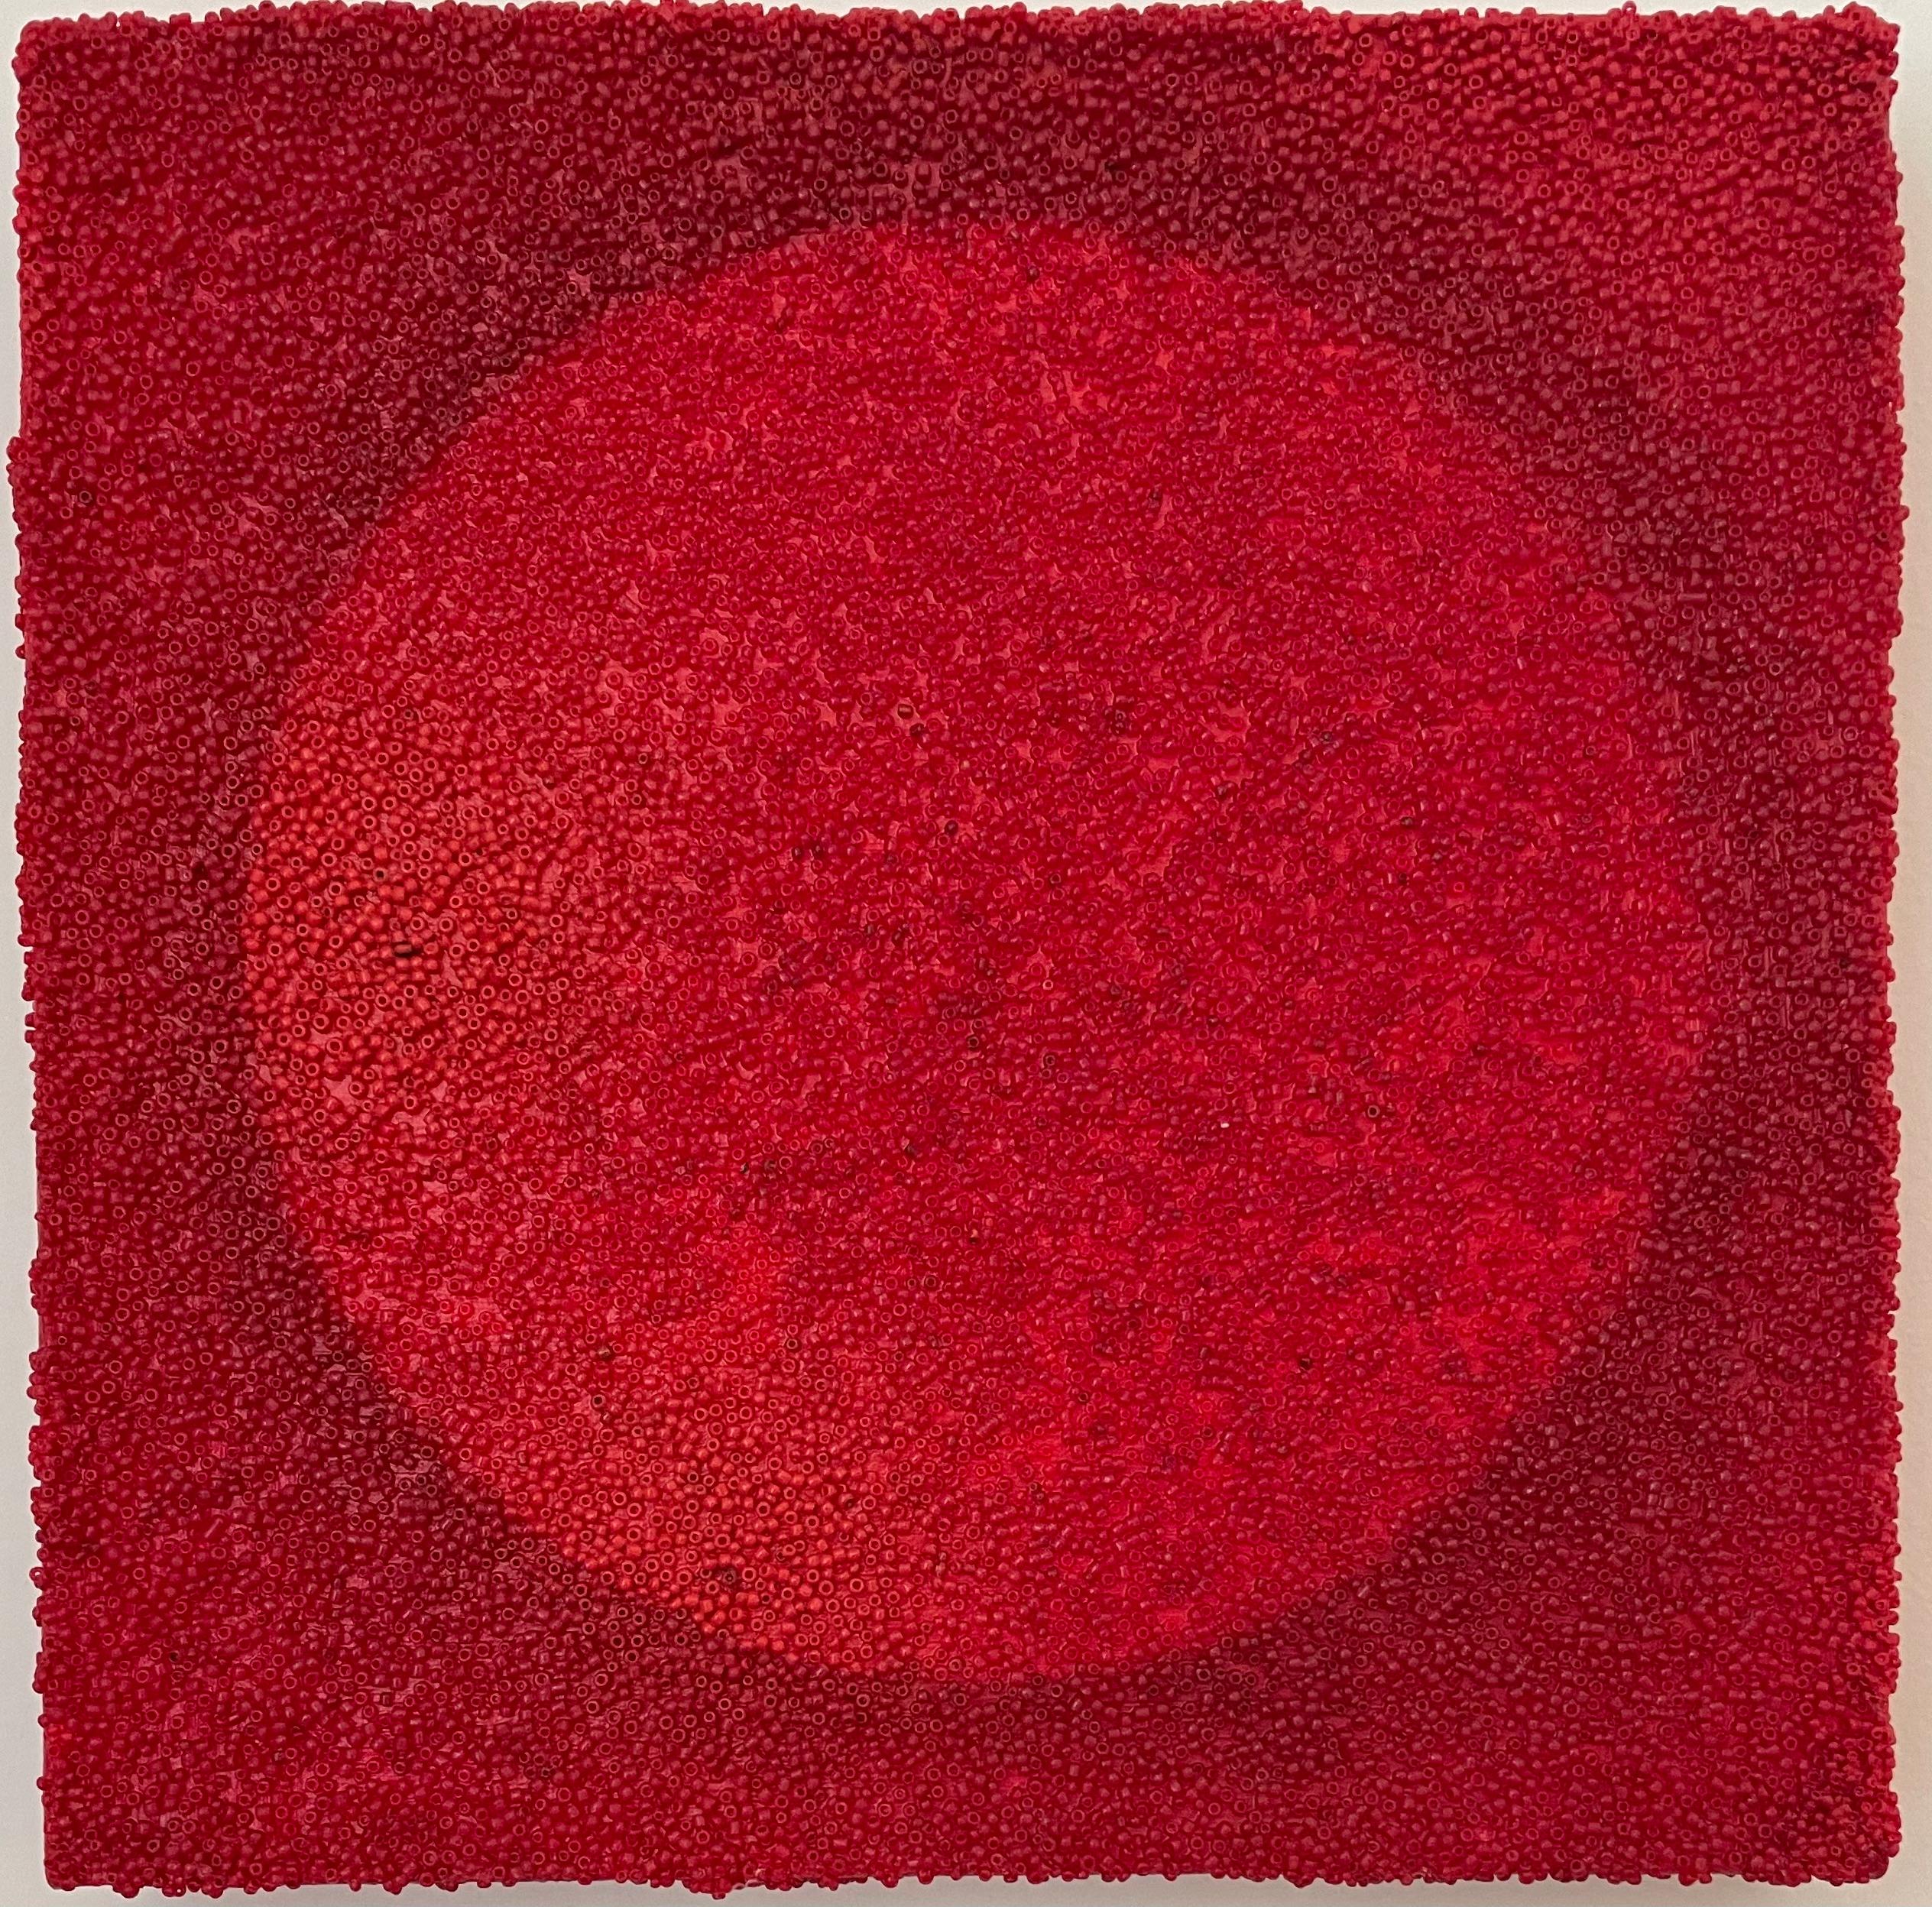 Antonio Puri Abstract Painting - Tantra 57: minimalist abstract mandala sculpture painting, red circles